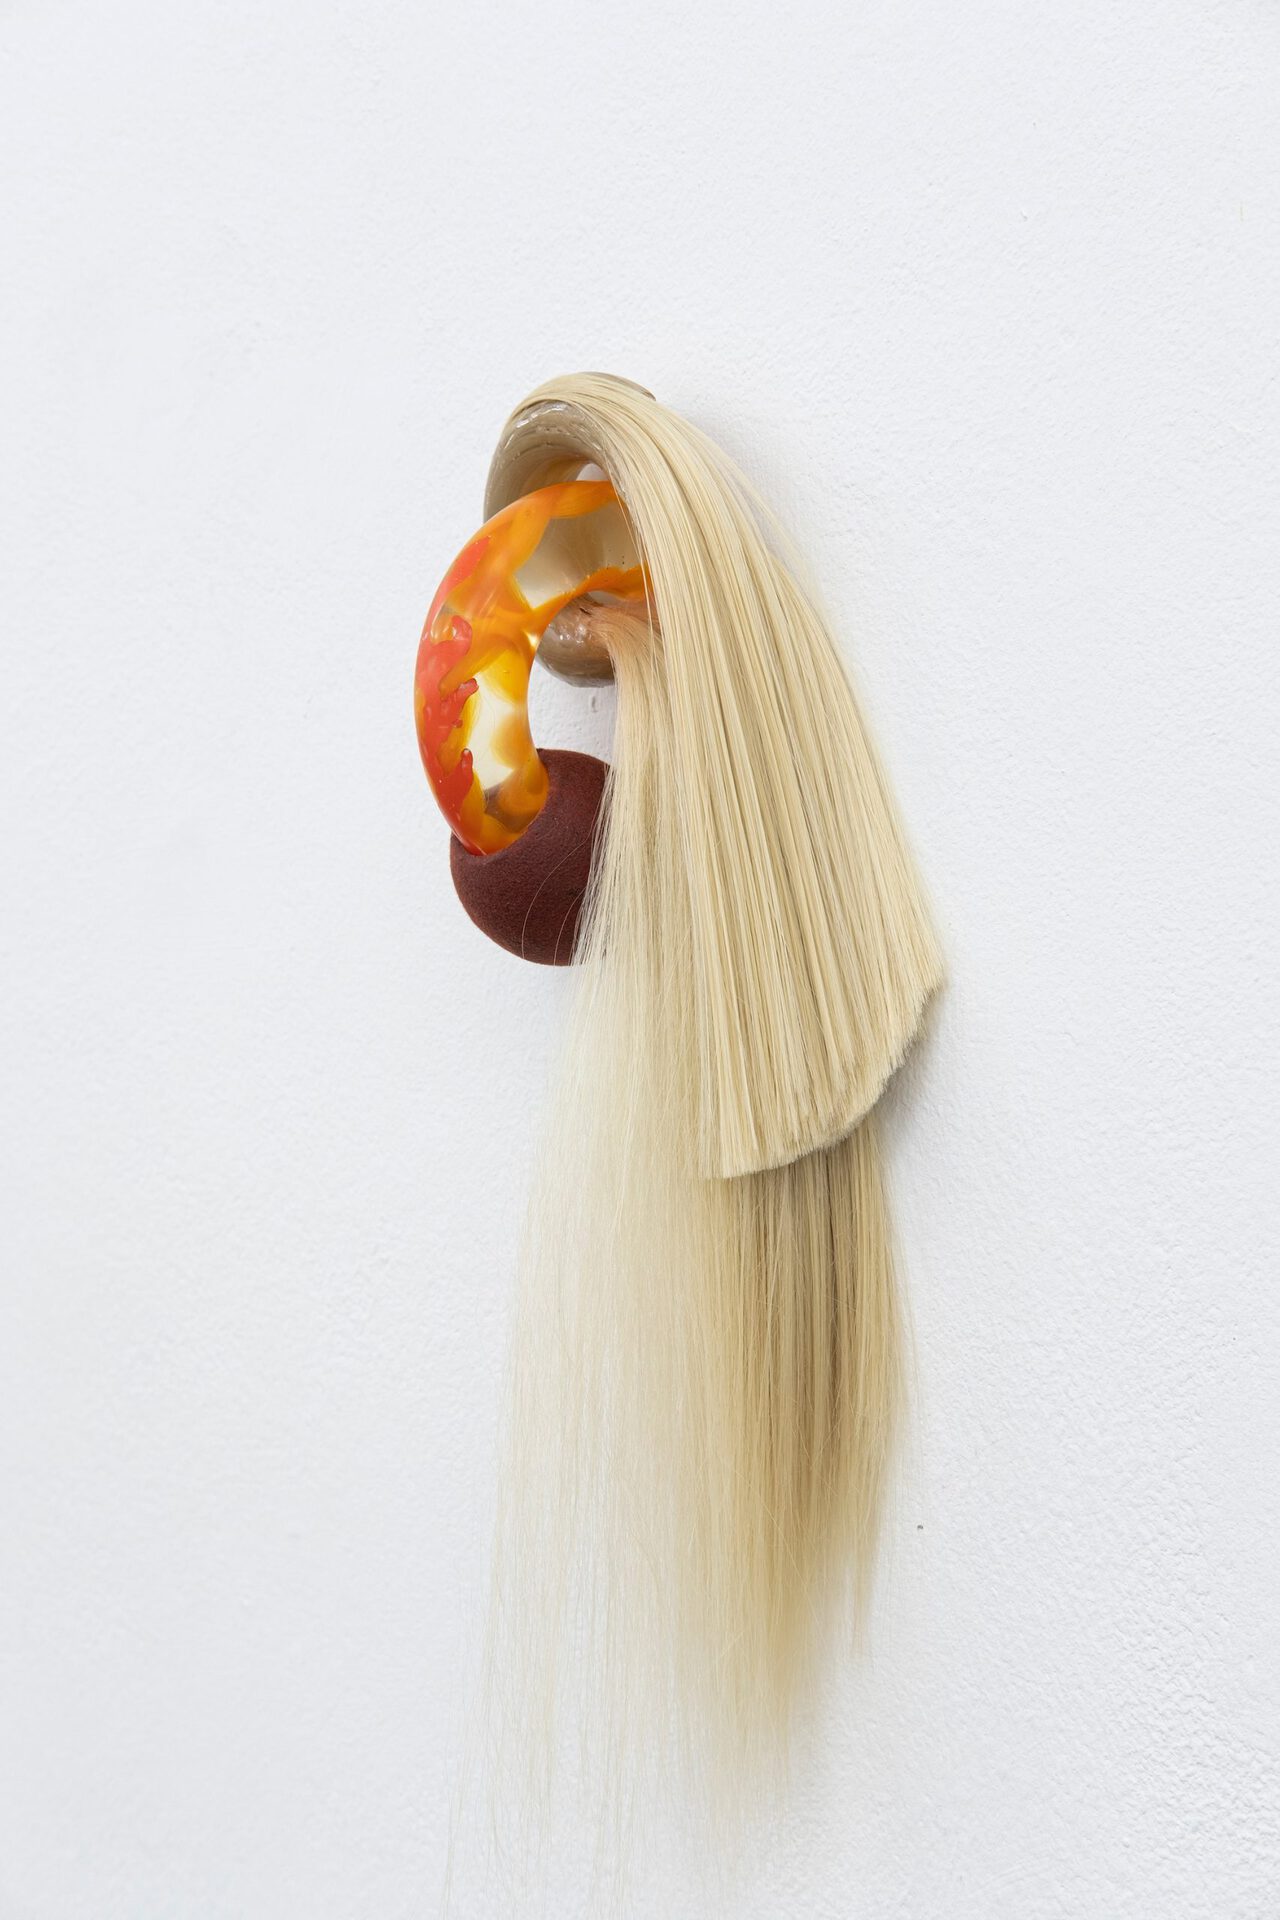 Zu Kalinowska, Occam’s Knot 2021 Human &amp; Synthetic Hair, Epoxy, Wood,9x17x40cm